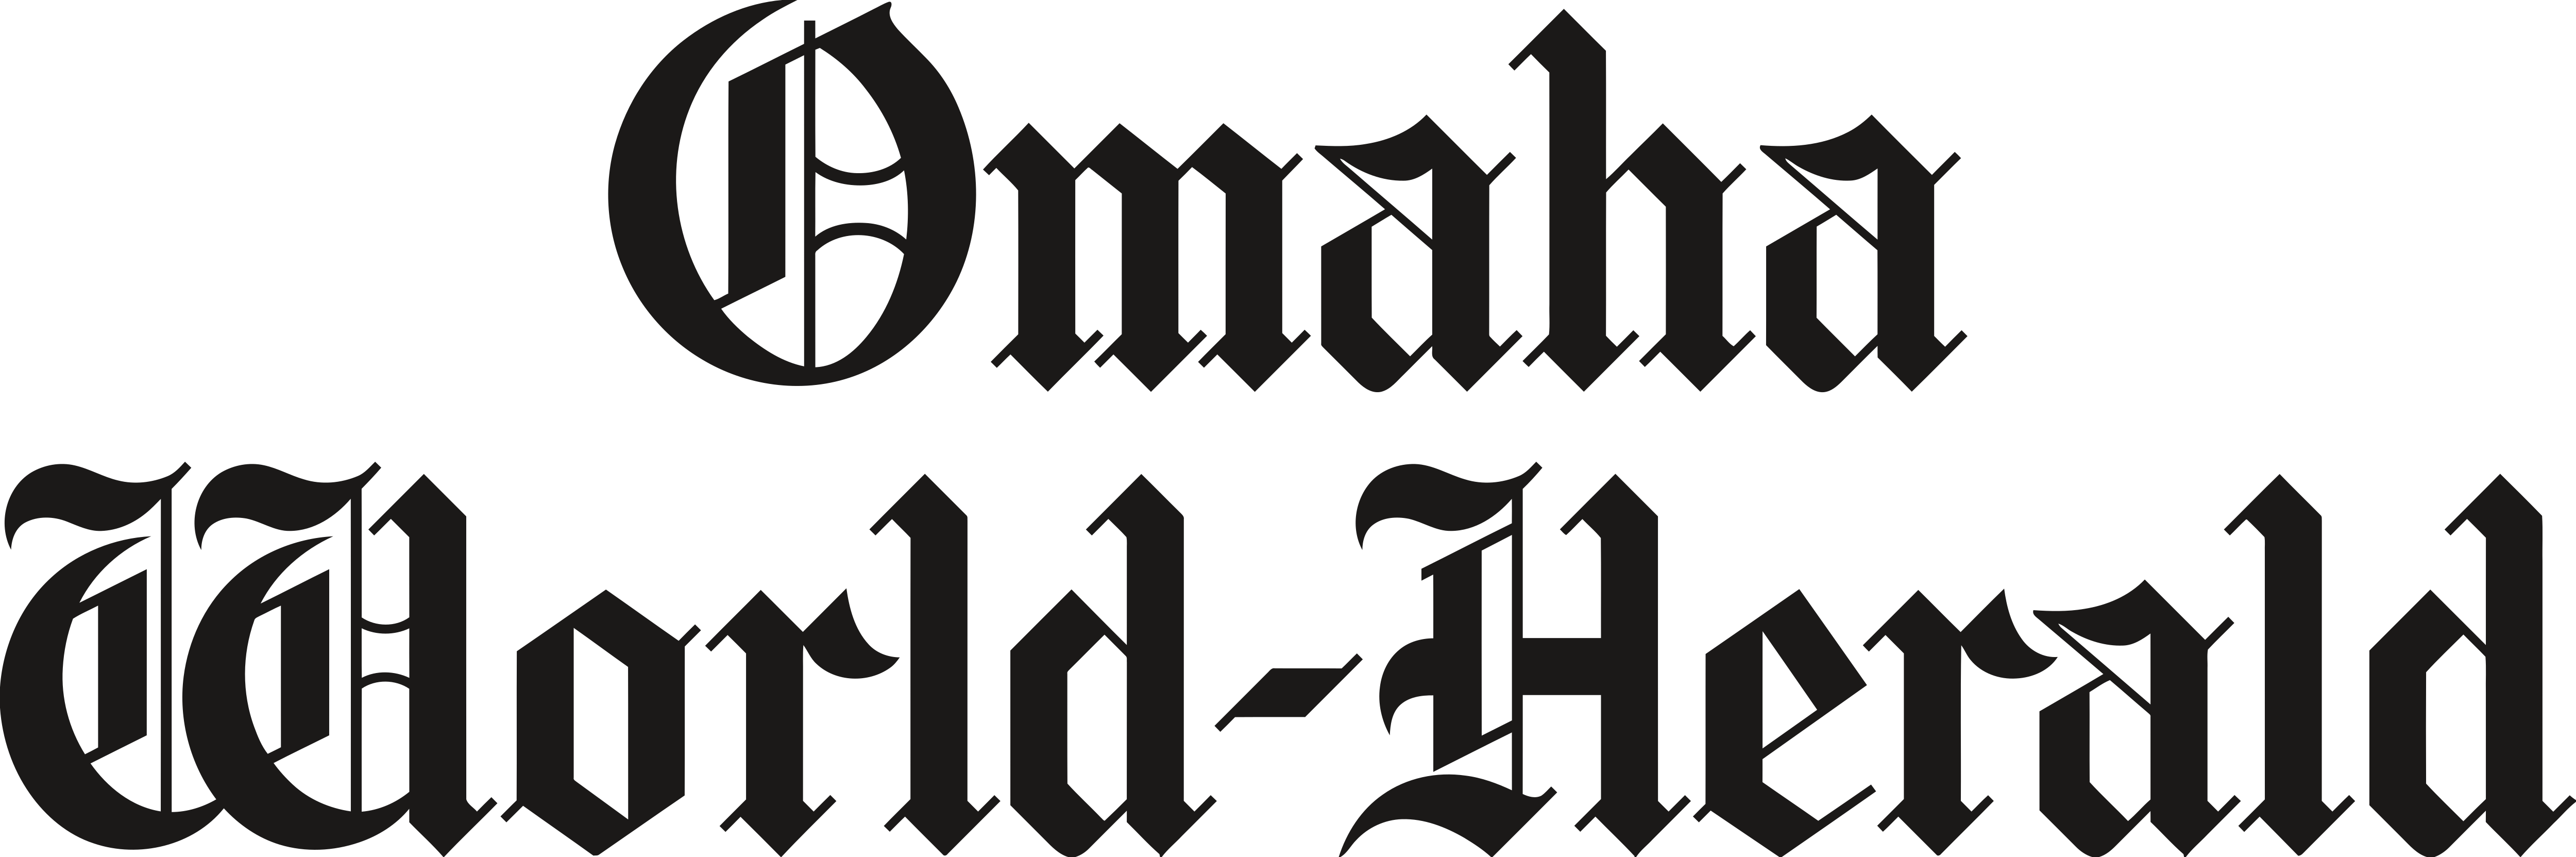 Omaha_World_Herald_Logo_black